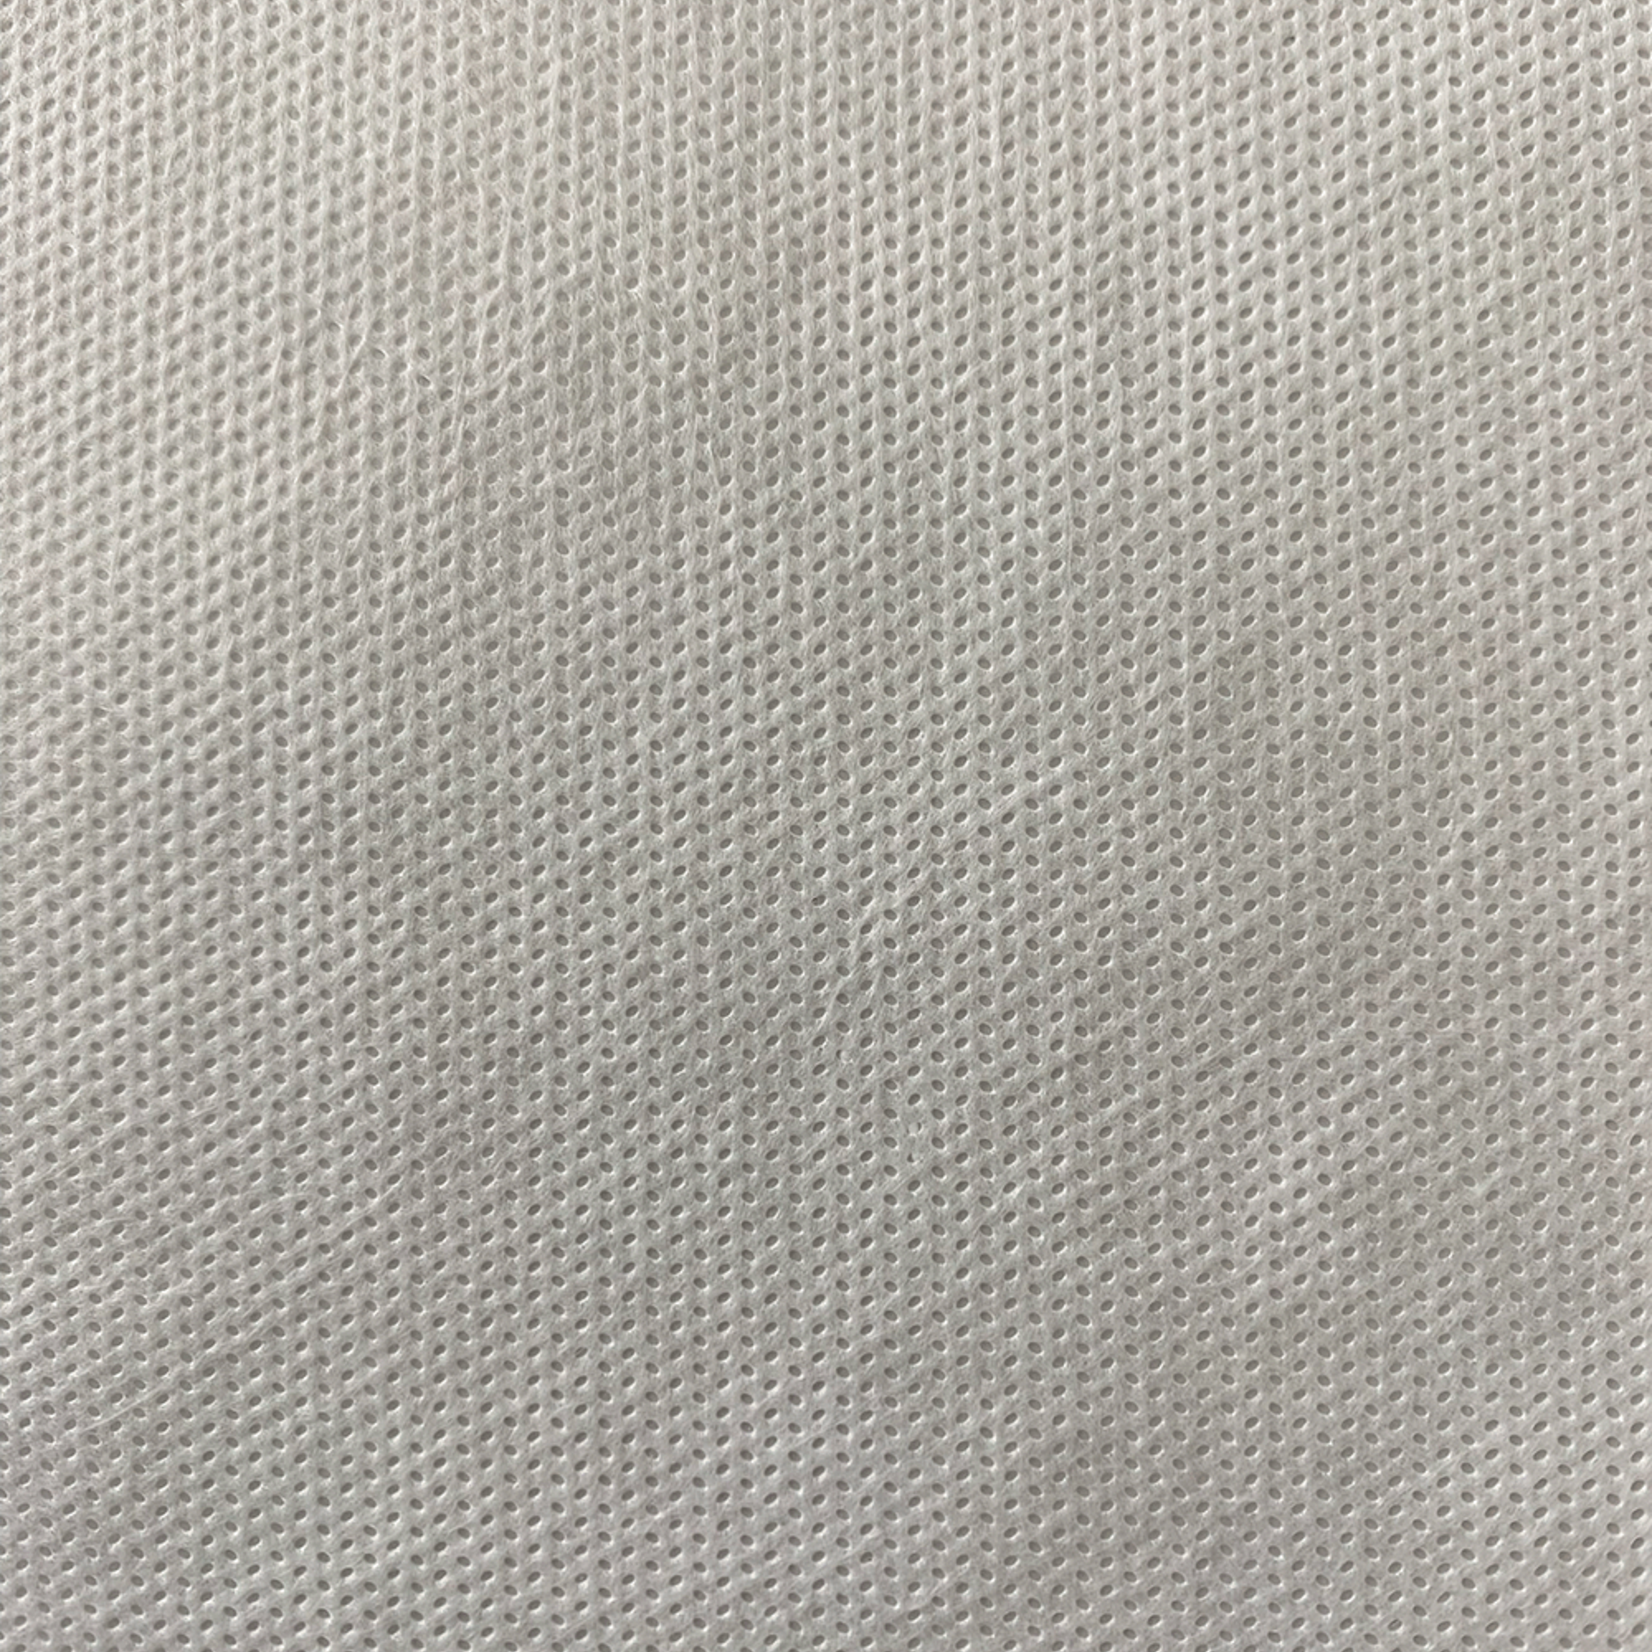 P. Glatzeder GmbH Special item: PP-Spunbond 50 g/m², white, width 56 cm, 1,050 m